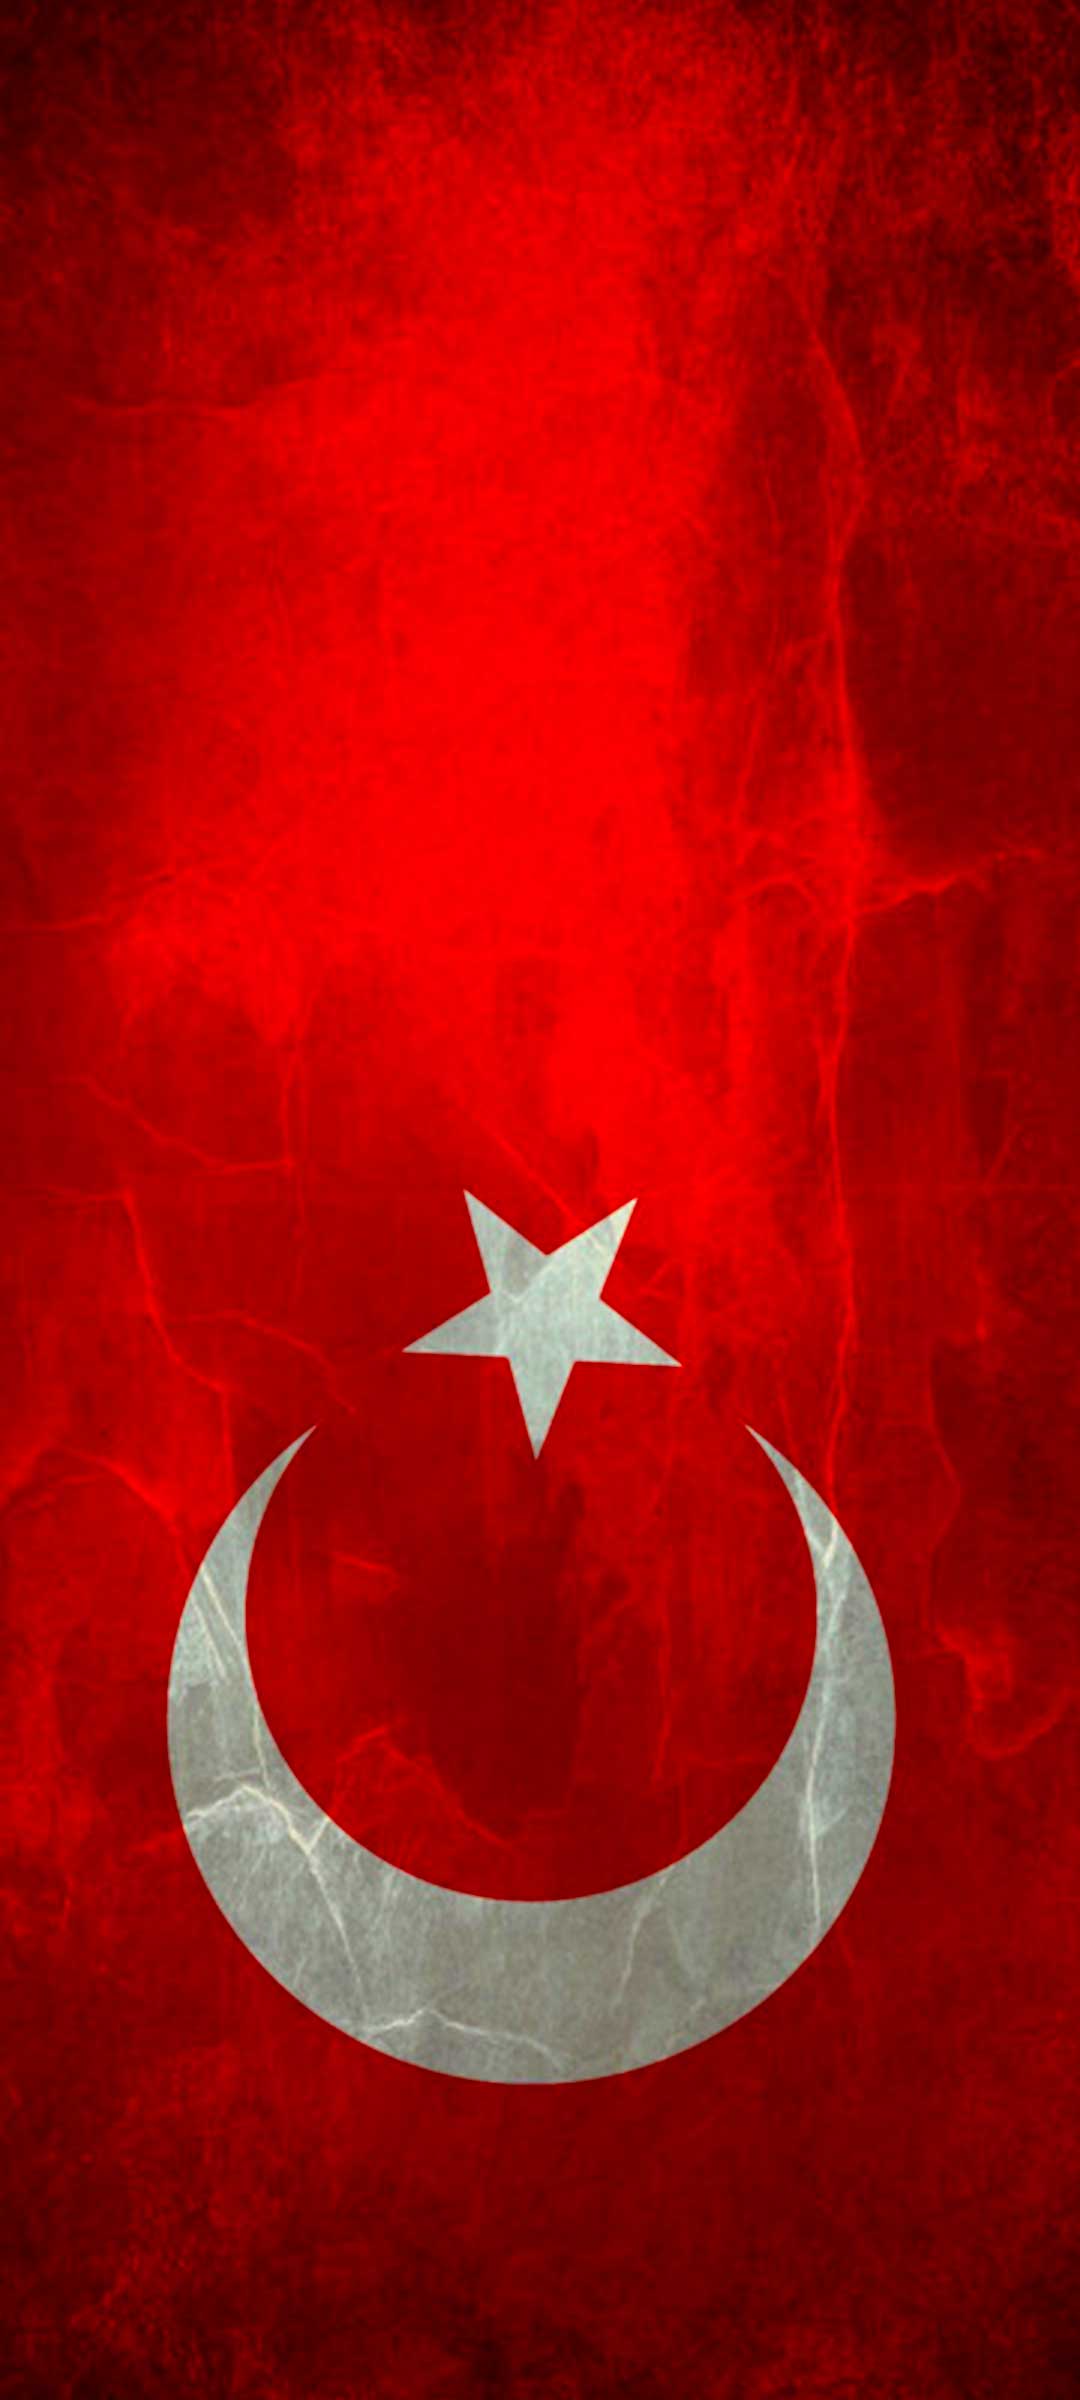 xiaomi redmi note 9 pro turk bayragi arkaplan resimleri 6